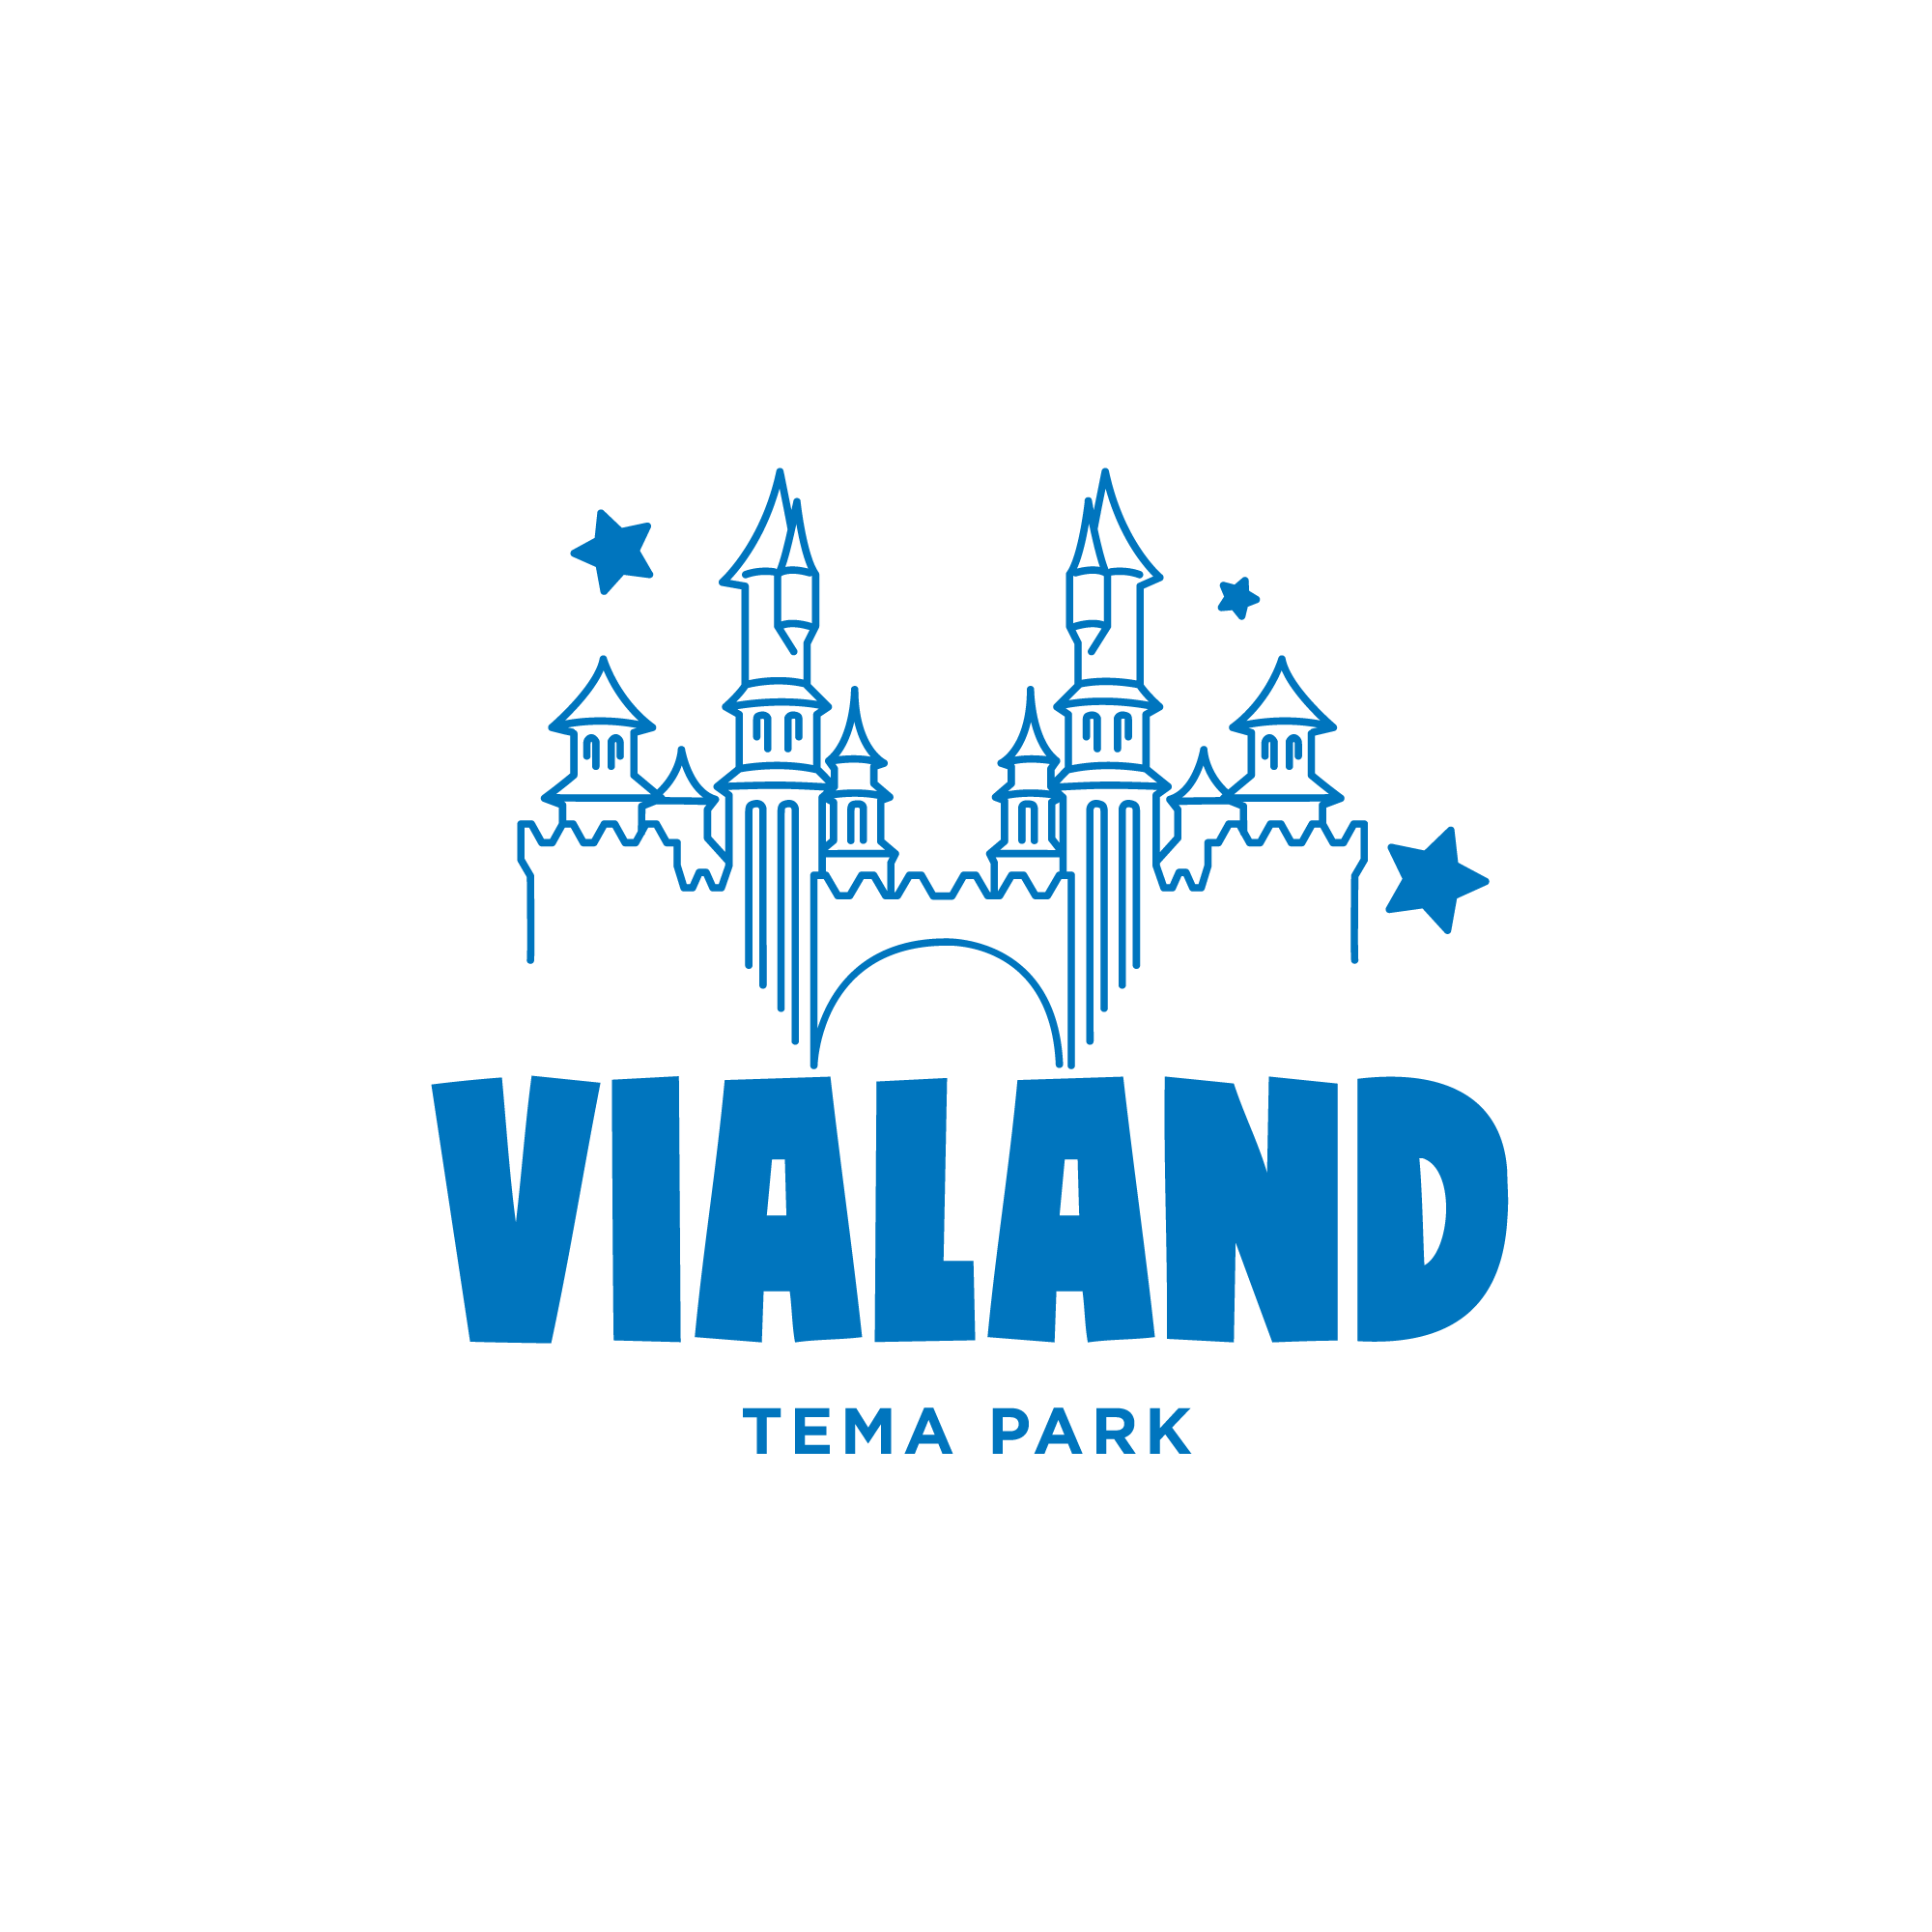 Vialand Tema Park